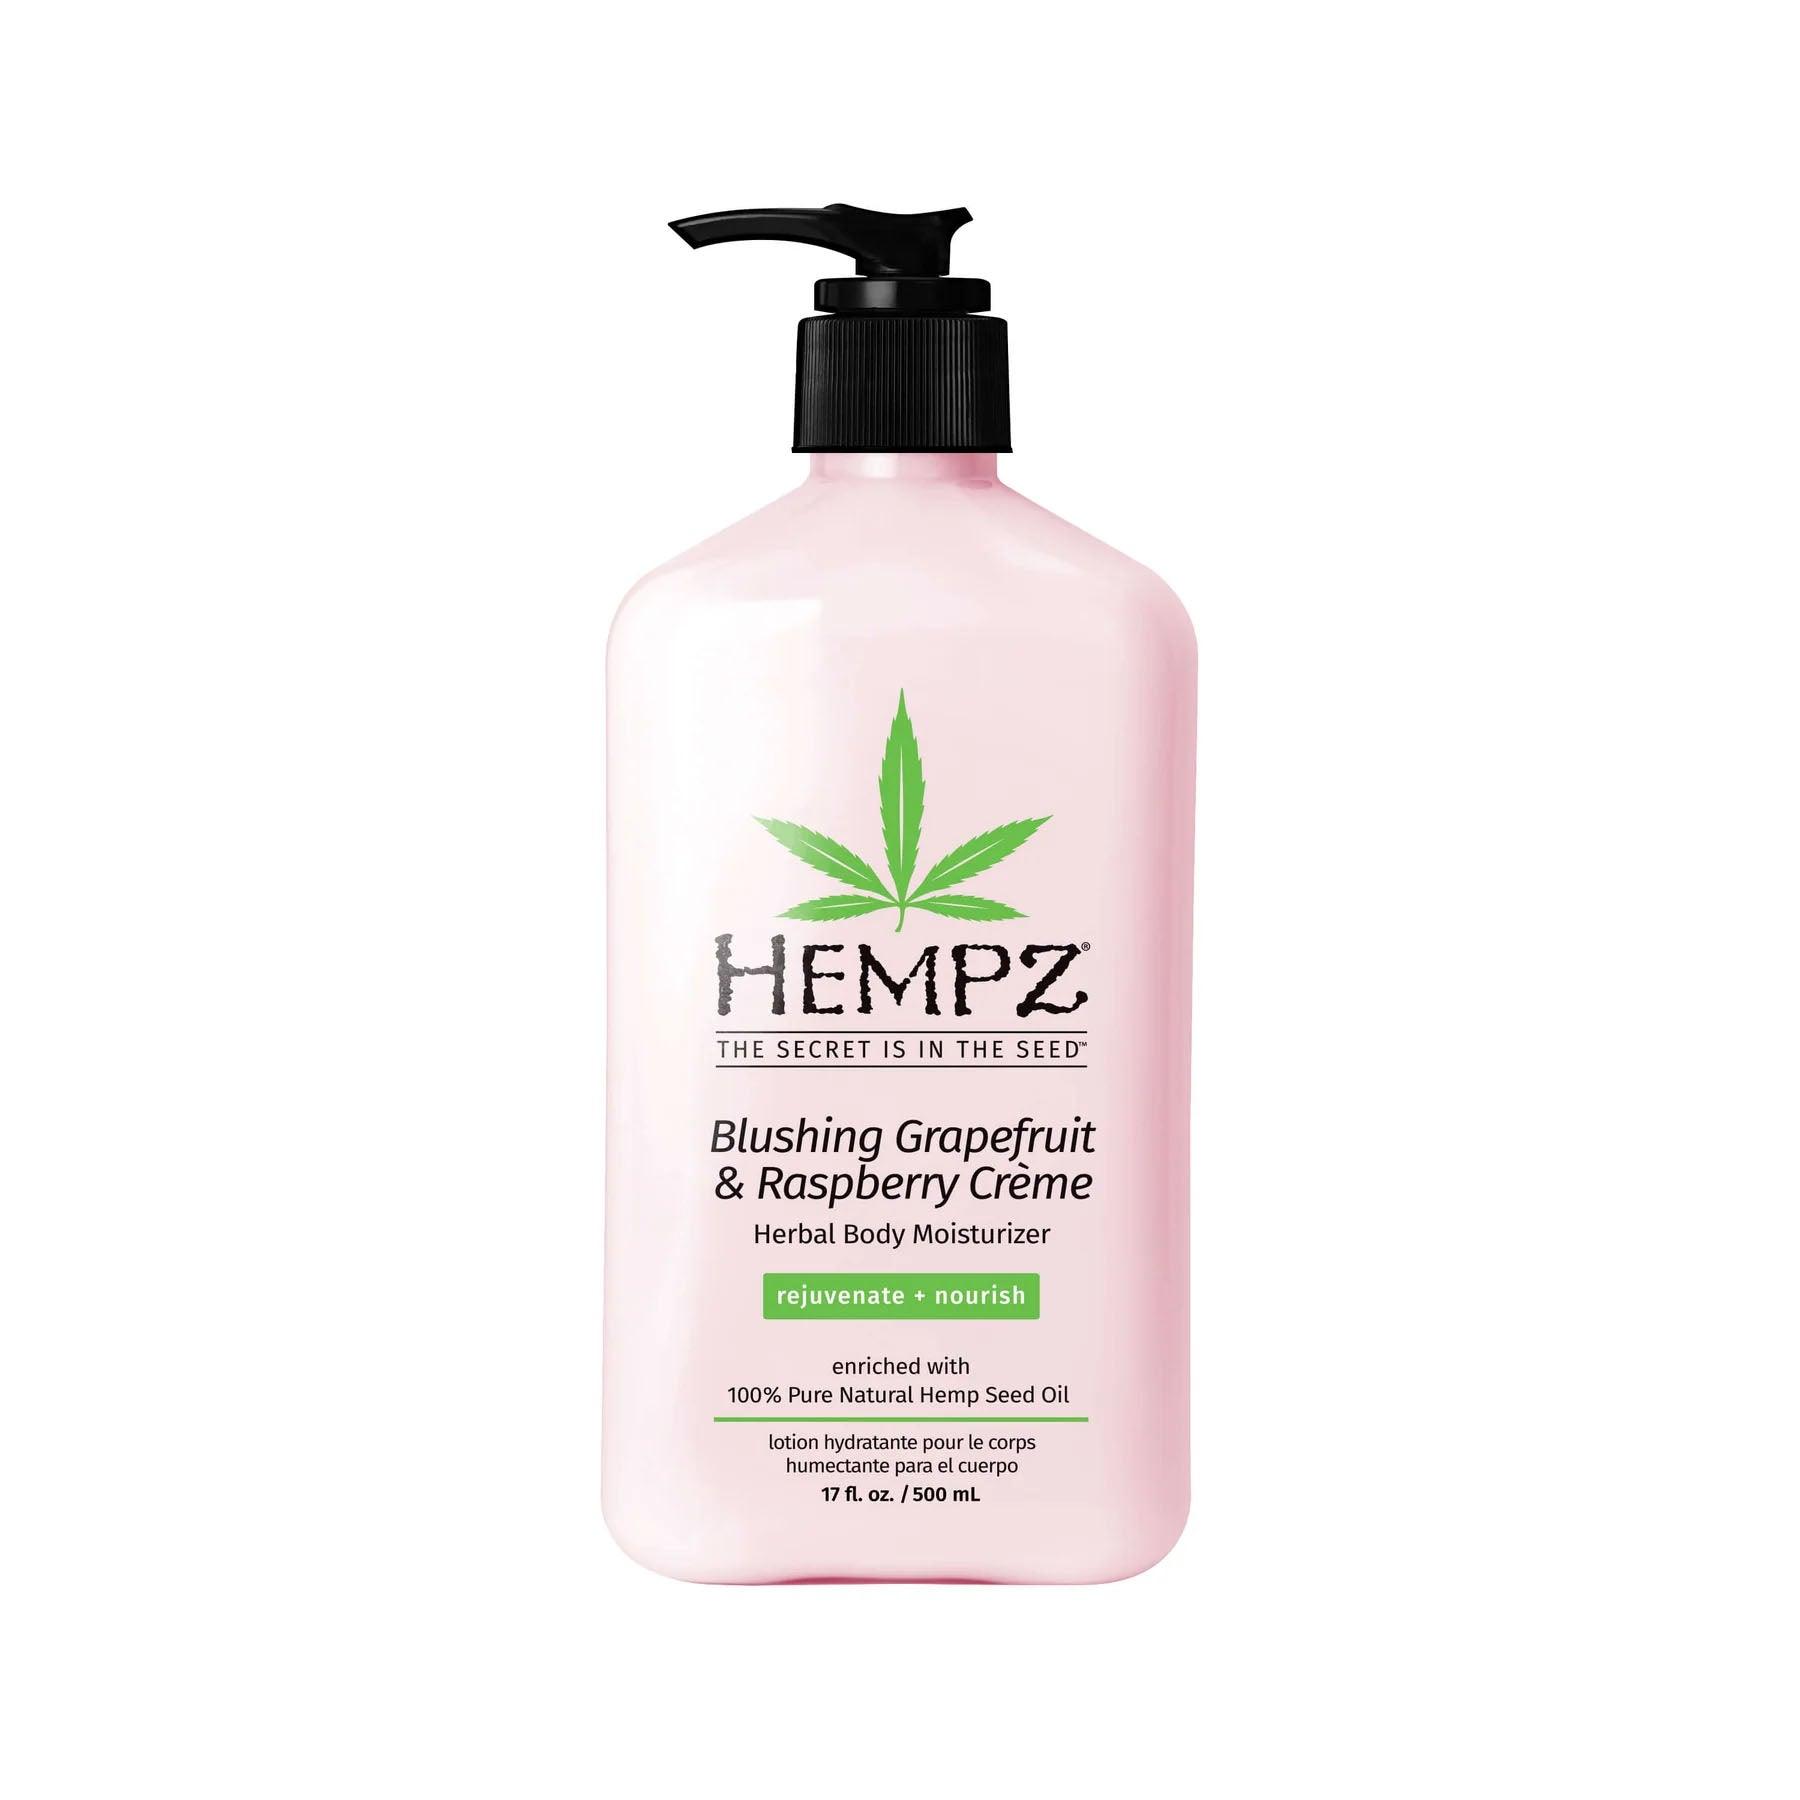 Hempz Lotion Pure Herbal Body Moisturizers 17 fl oz - Blushing Graperfruit & Raspberrt Crime